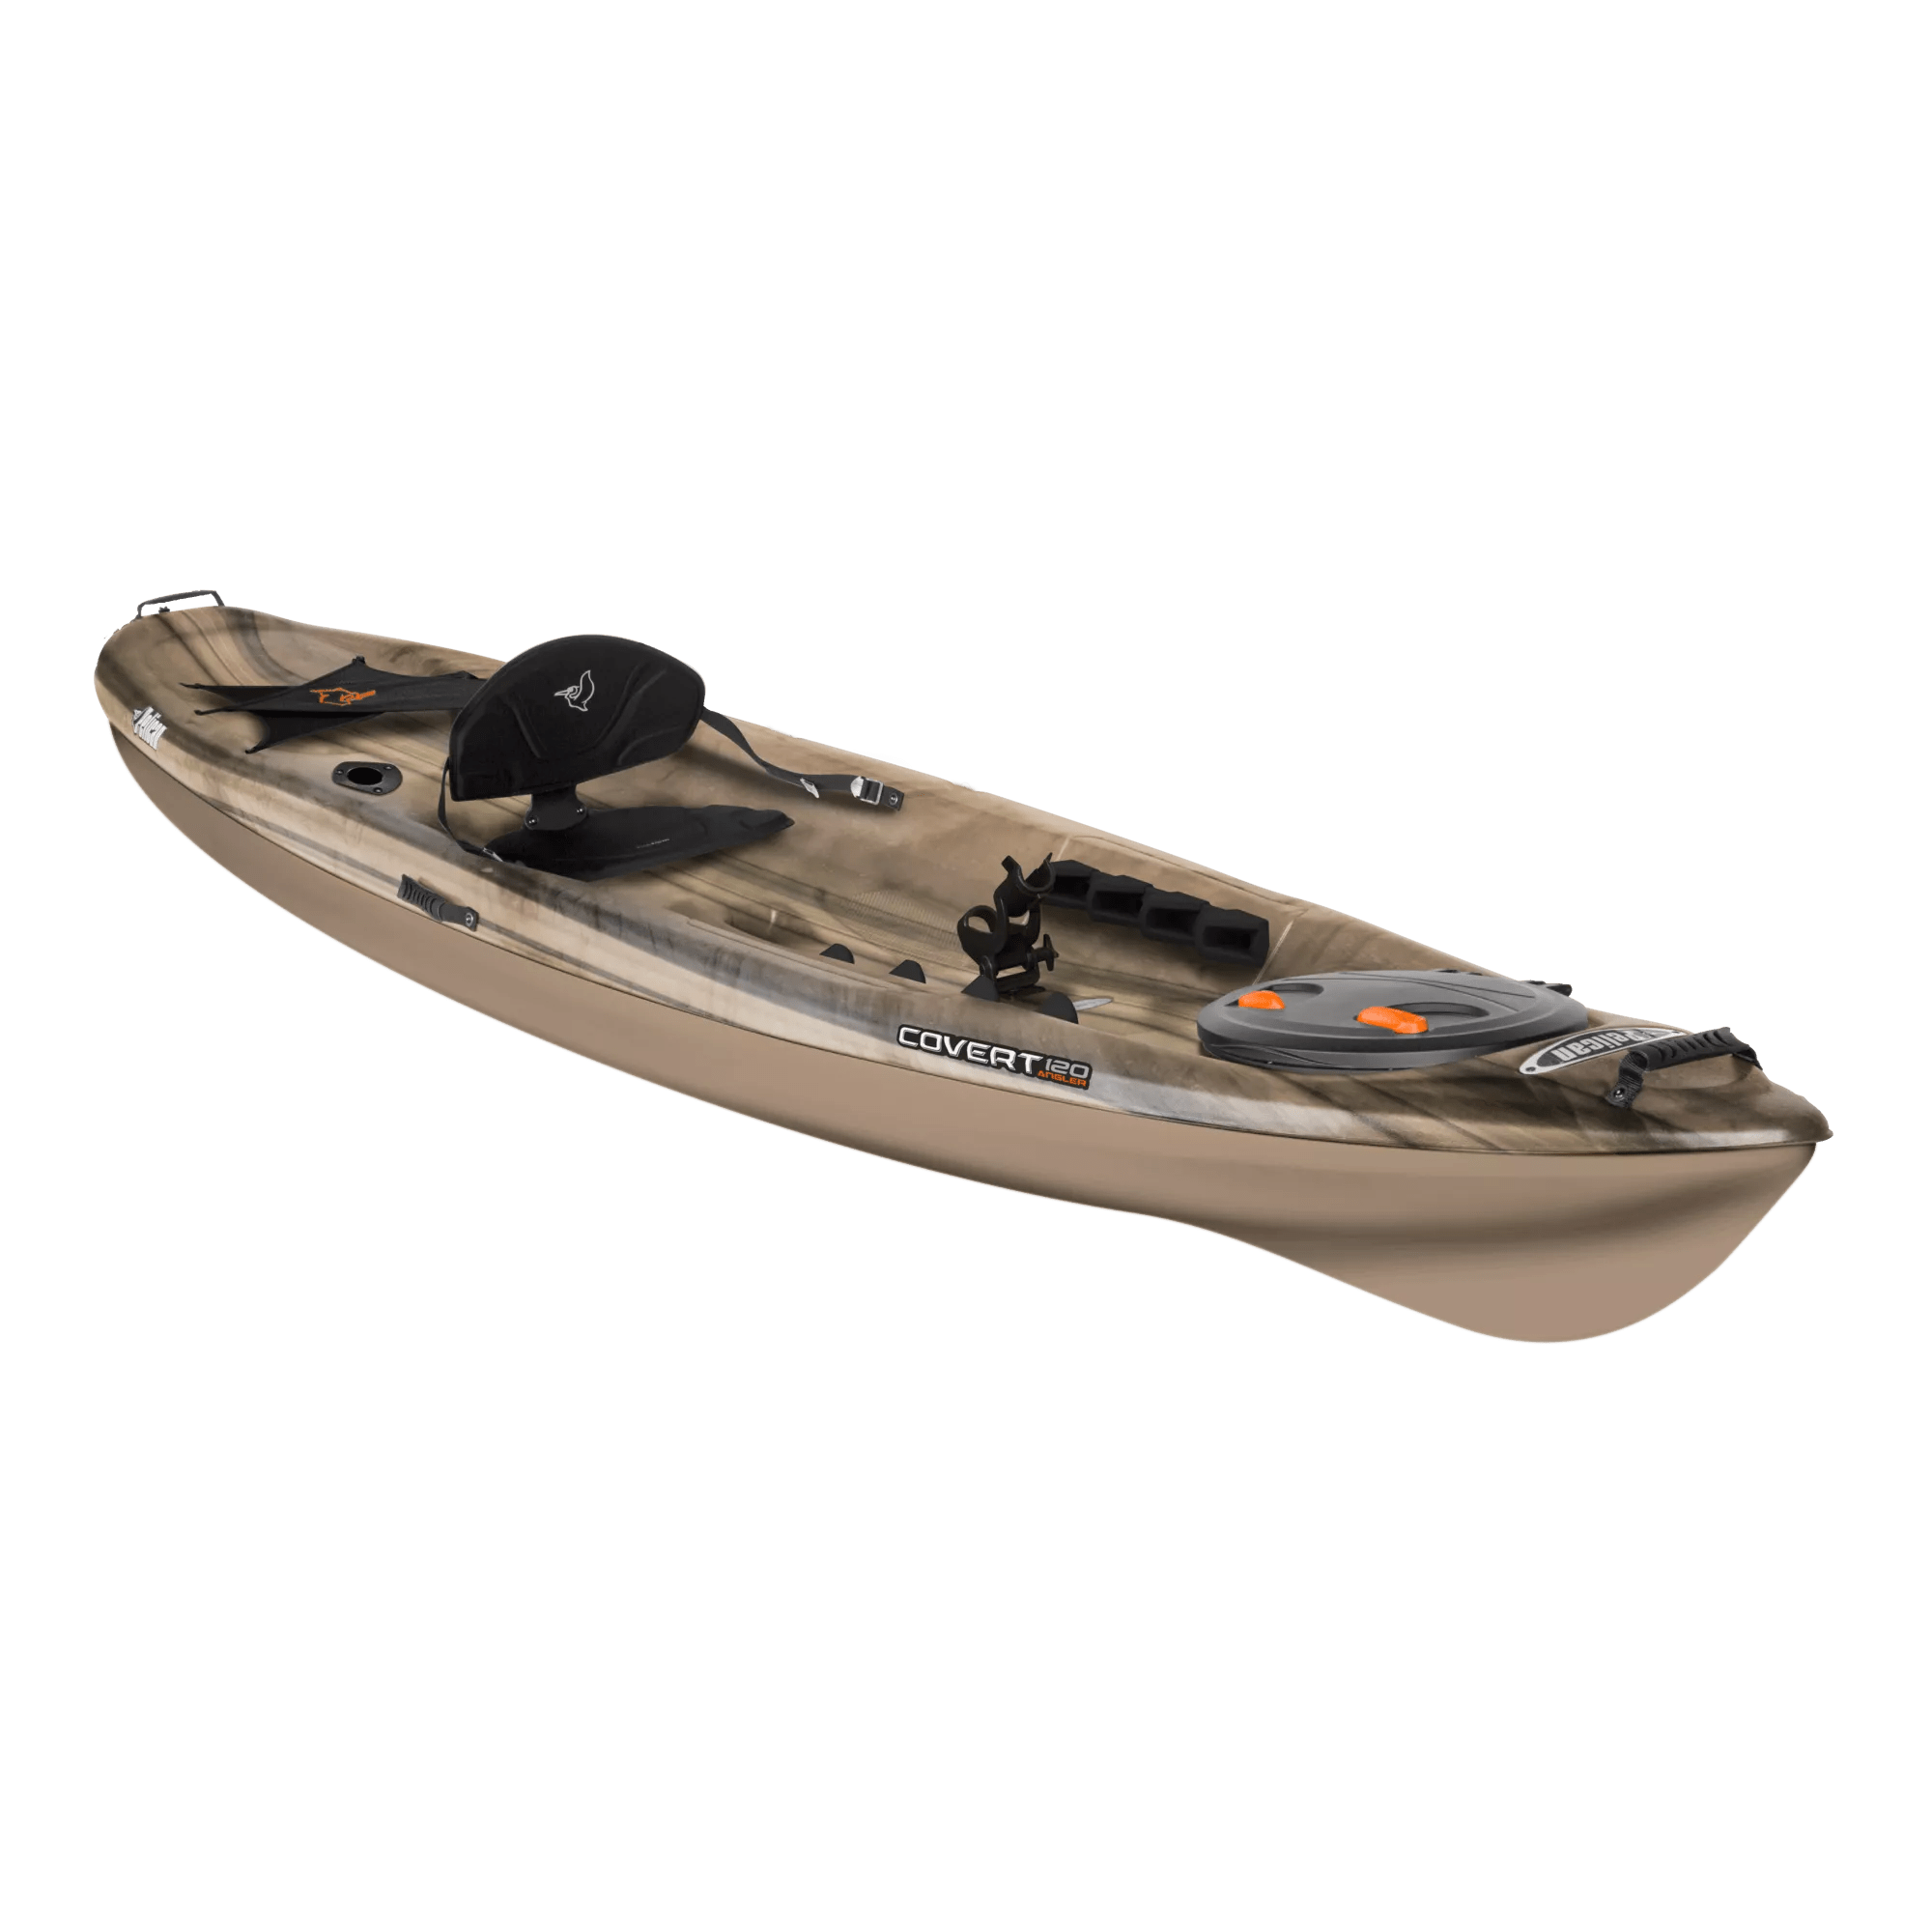 PELICAN - Covert 120 Angler Fishing Kayak - Black - KWF12P200 - ISO